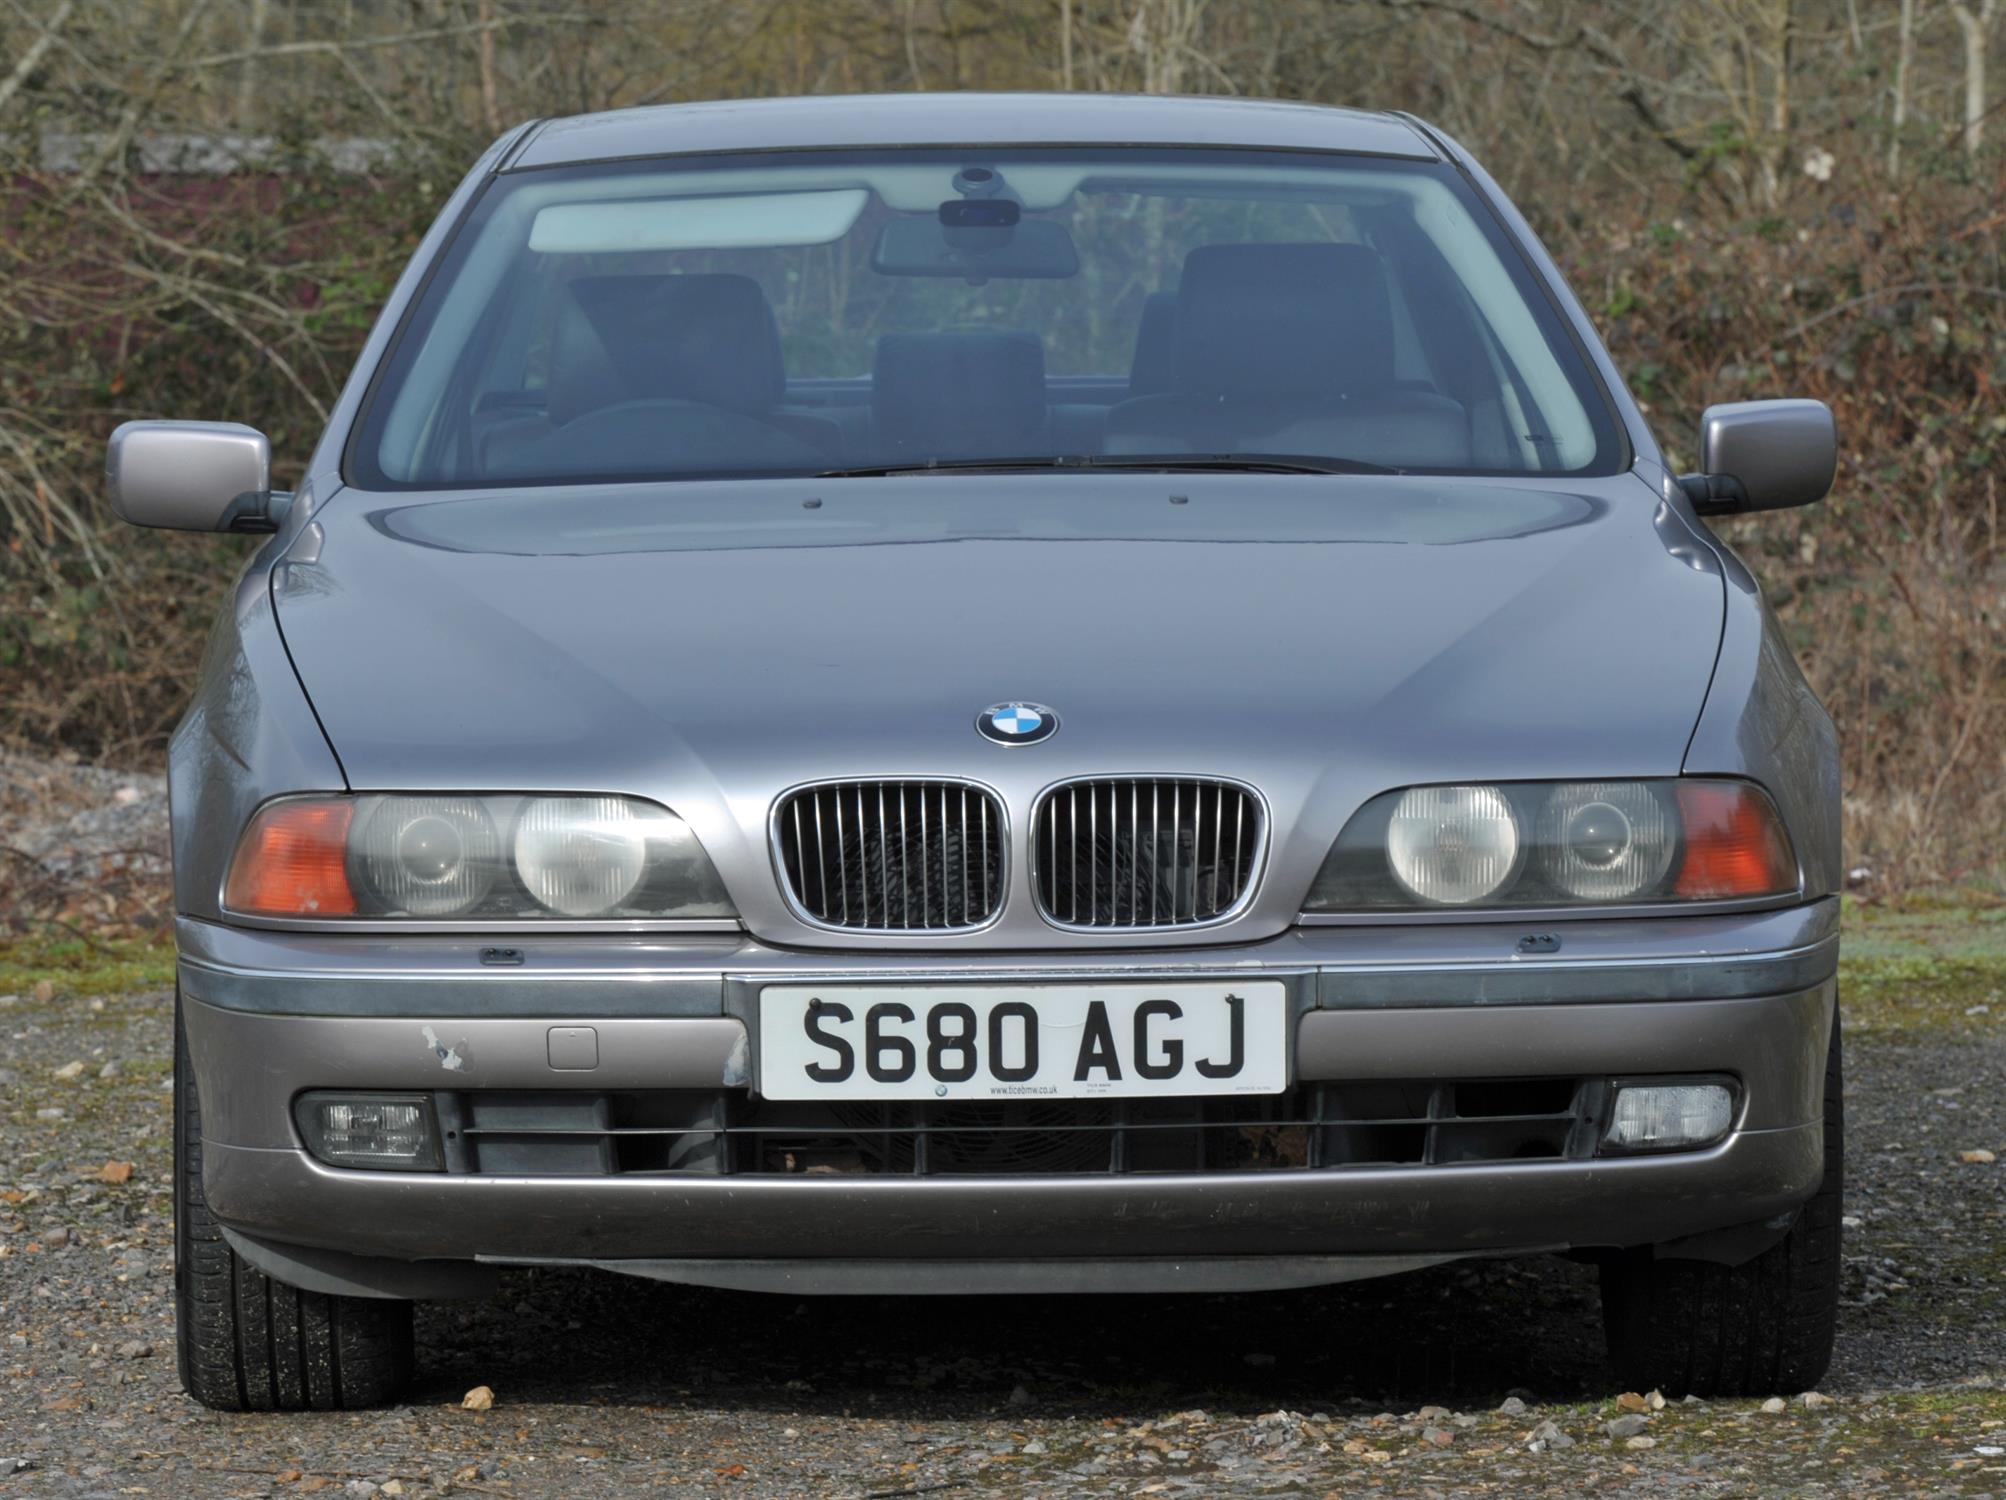 1998 BMW 535i SE Petrol Automatic saloon. Registration number: S680 AGJ. Mileage: 95, - Image 2 of 15